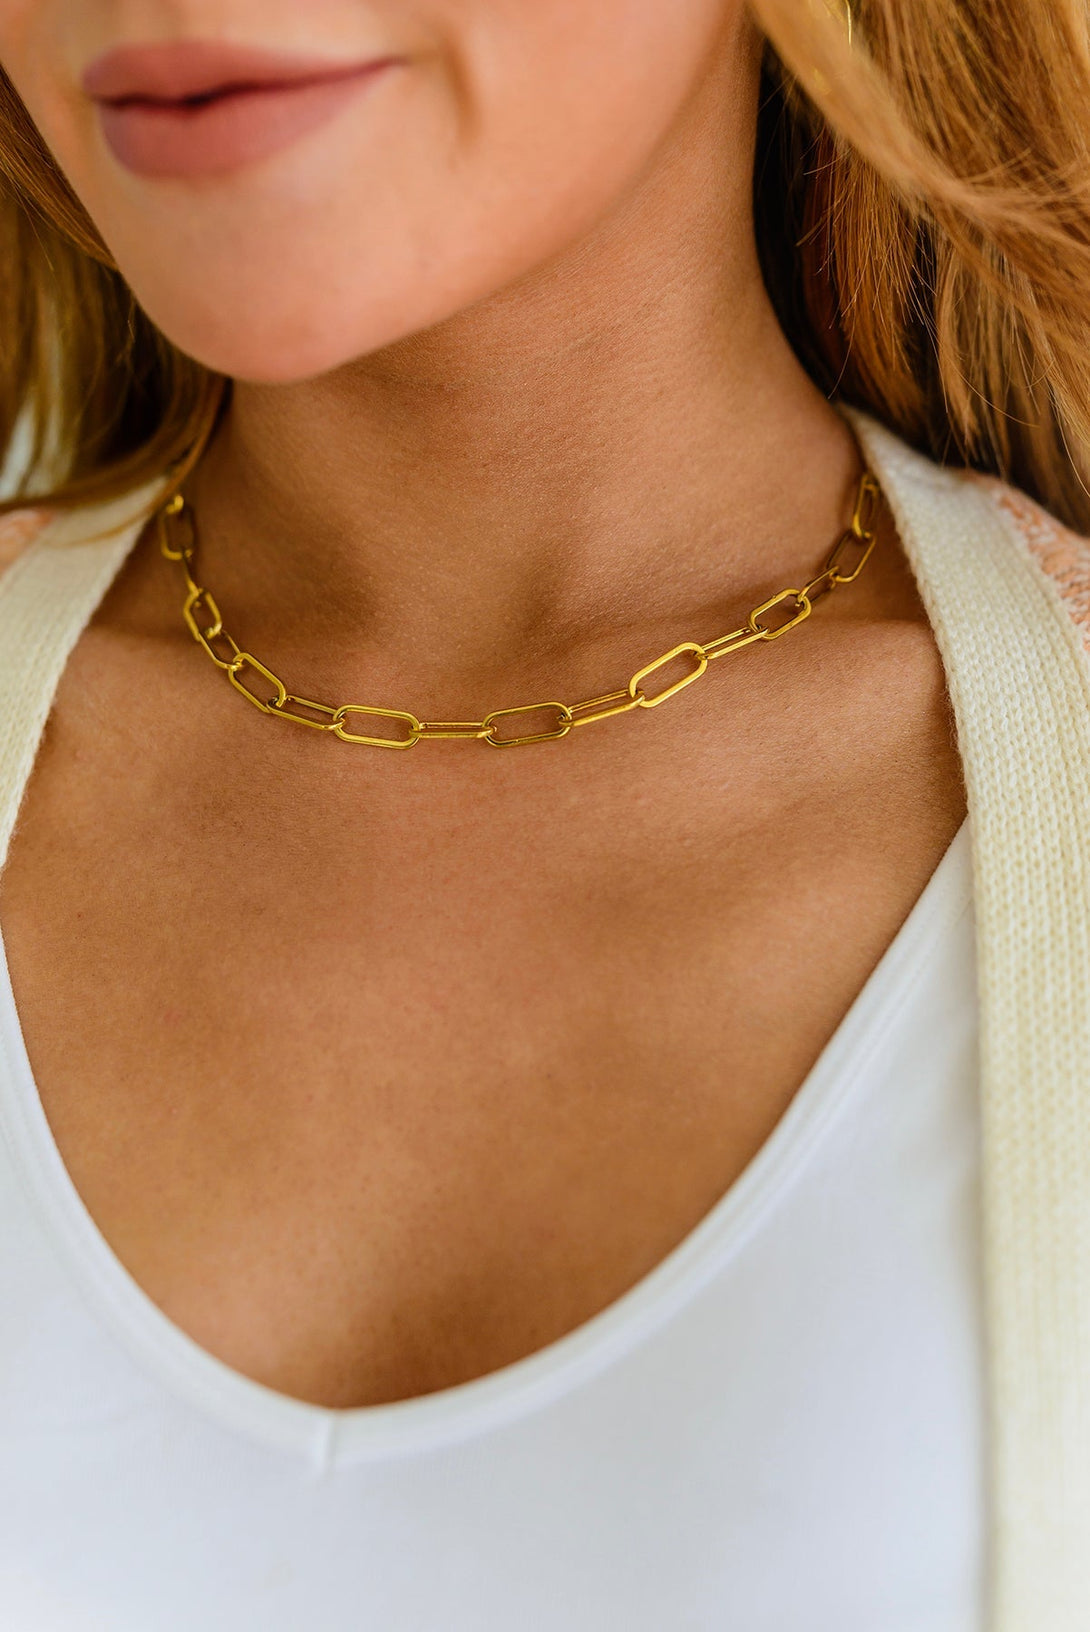 Classic Paper Clip Chain Necklace OS Necklaces by Vim&Vigor | Vim&Vigor Boutique